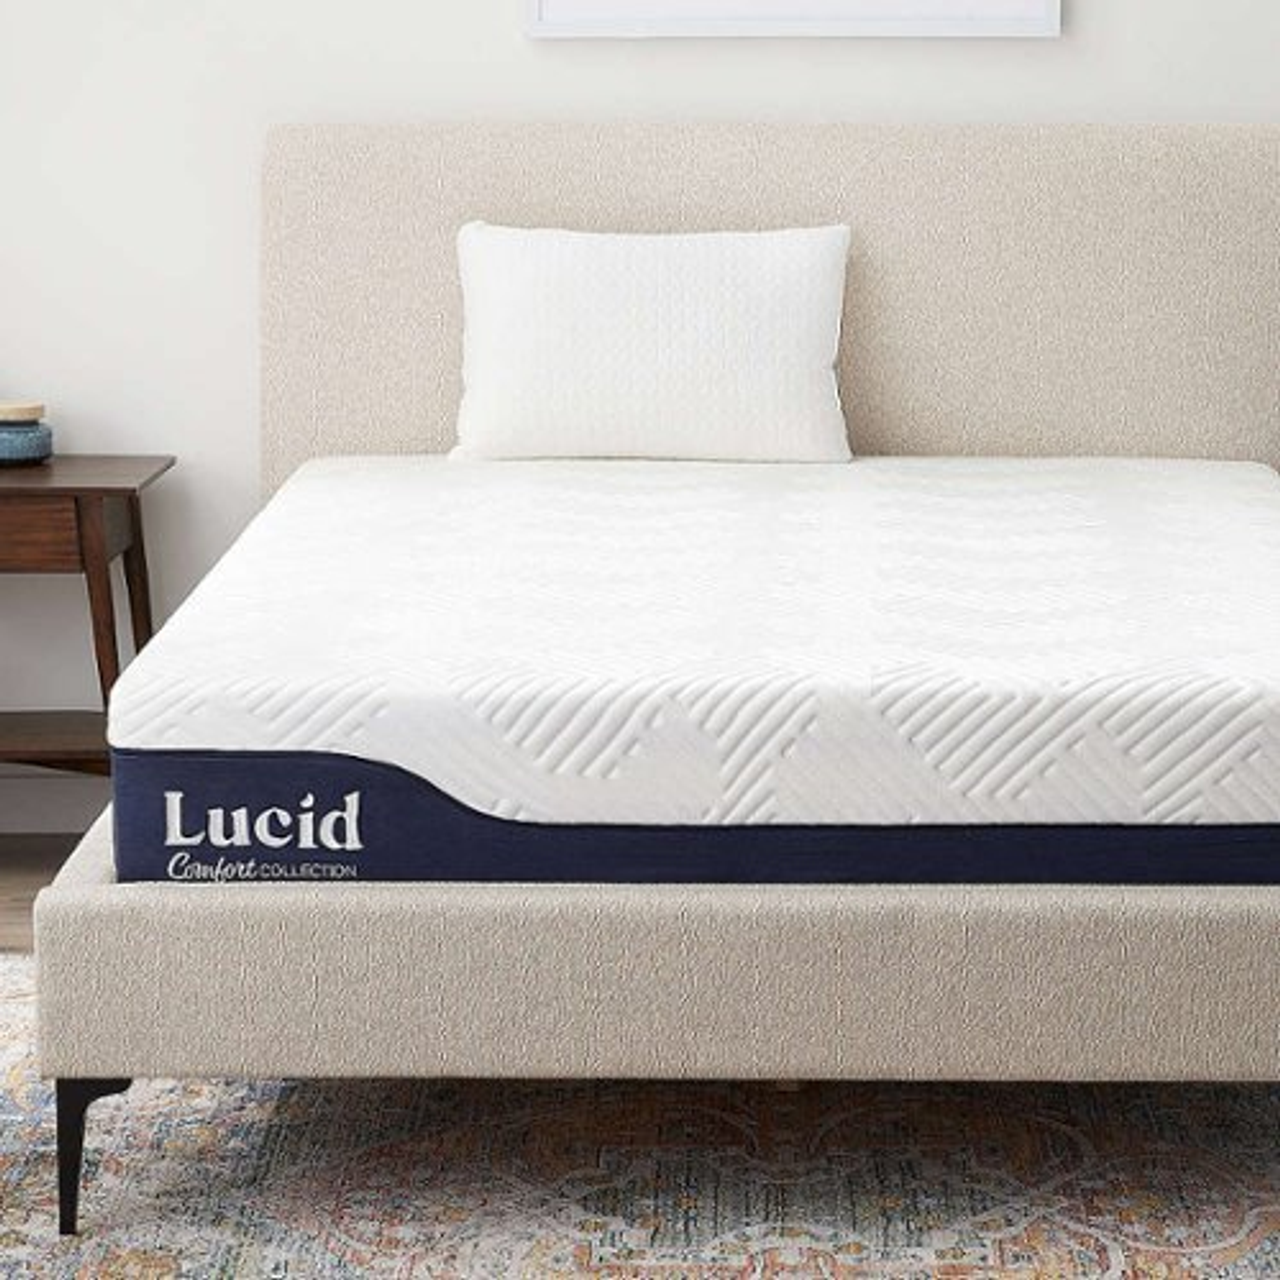 Lucid Comfort Collection - 10-inch Memory Foam Hybrid Mattress - Queen - White